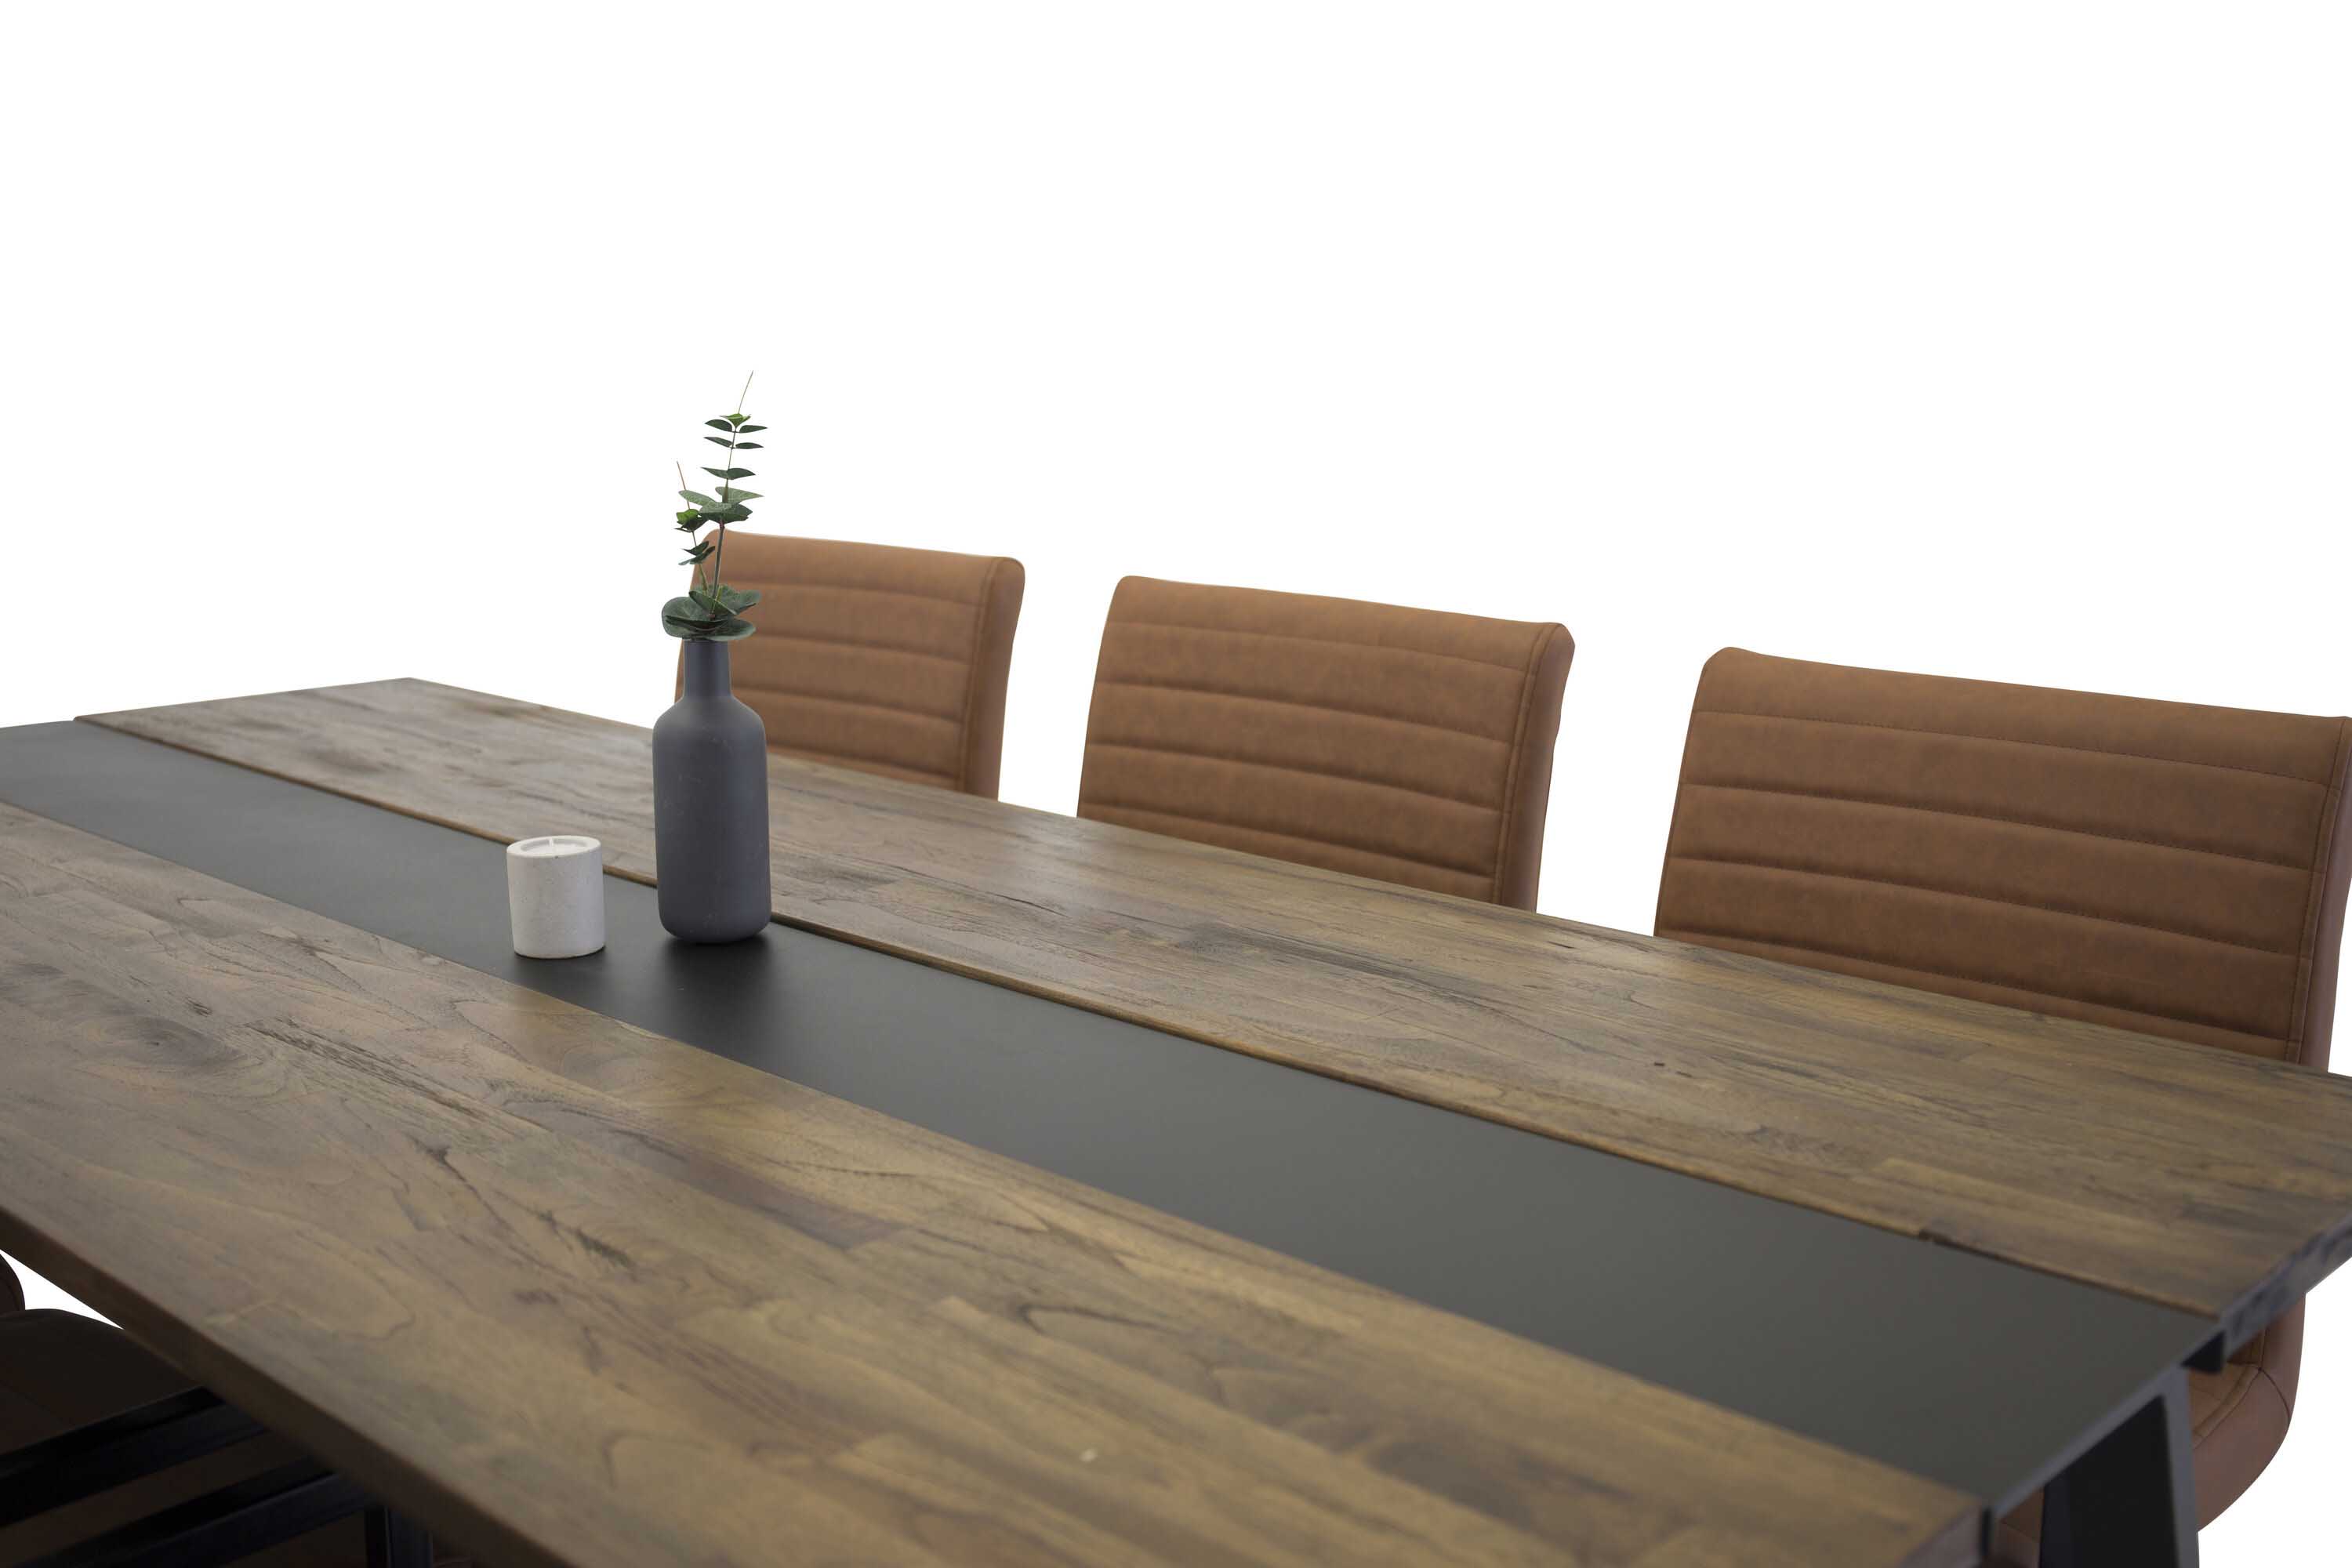 Venture Design Jakarta & Art spisebordssæt Natur/sort 6 st stole & borde 200 x 90 cm